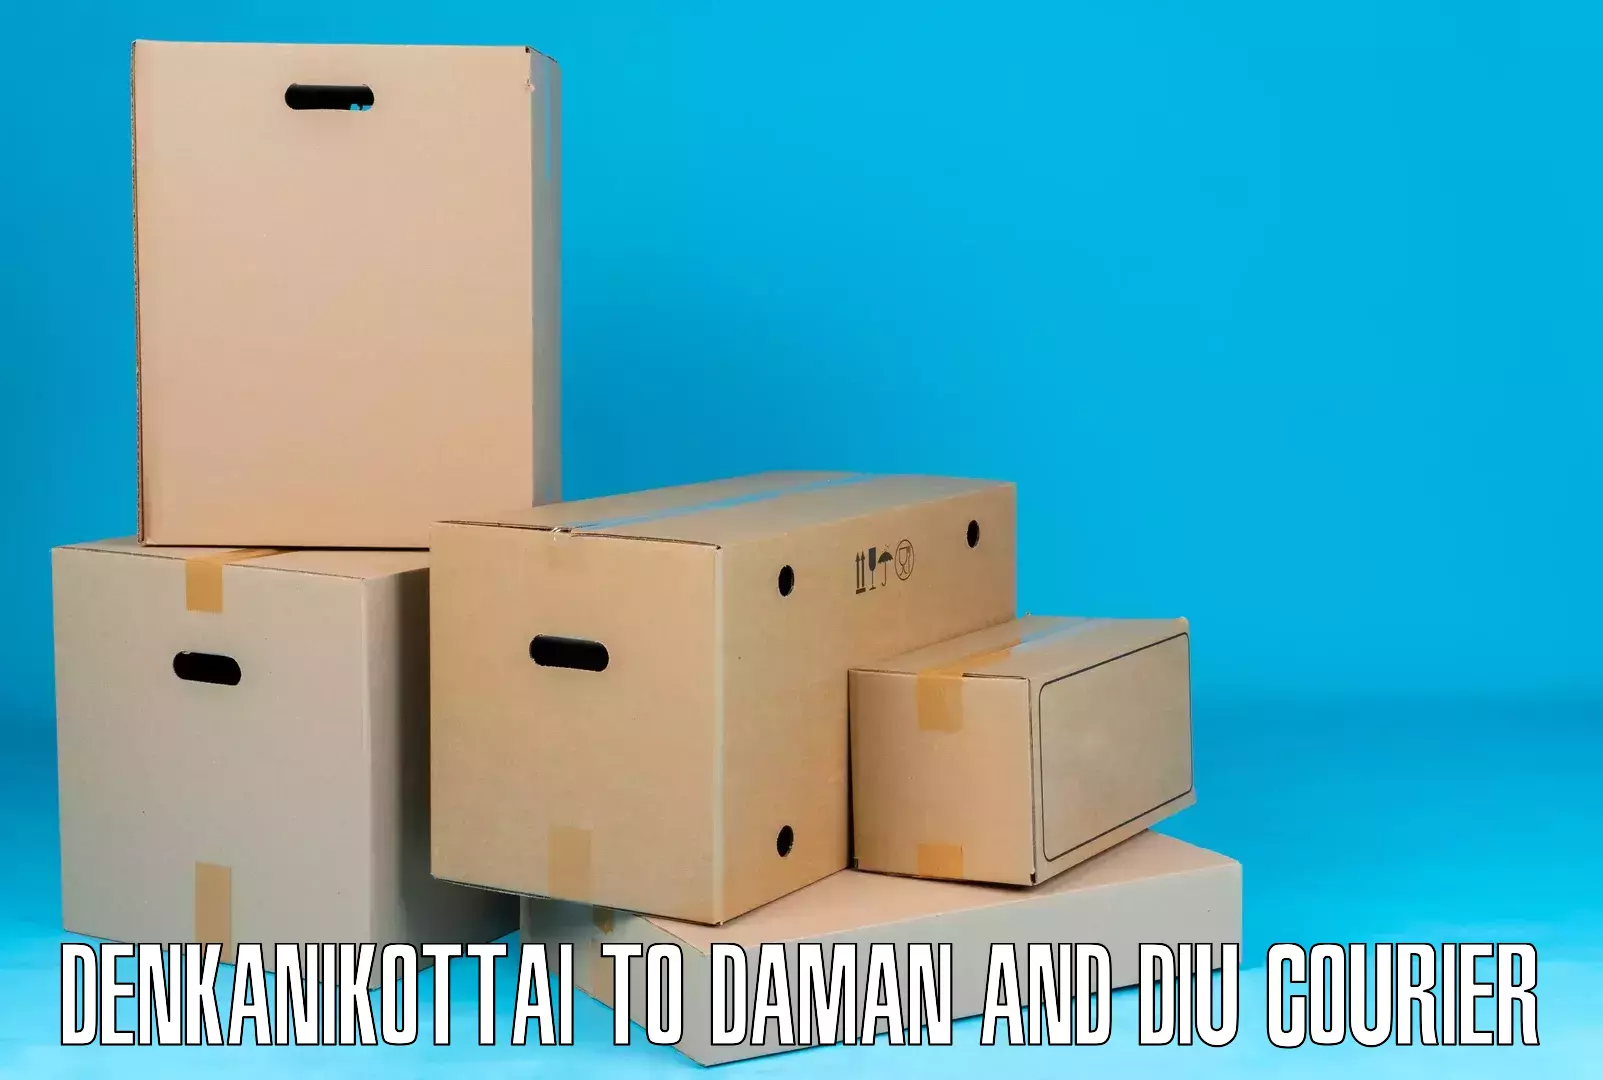 End-to-end delivery Denkanikottai to Daman and Diu